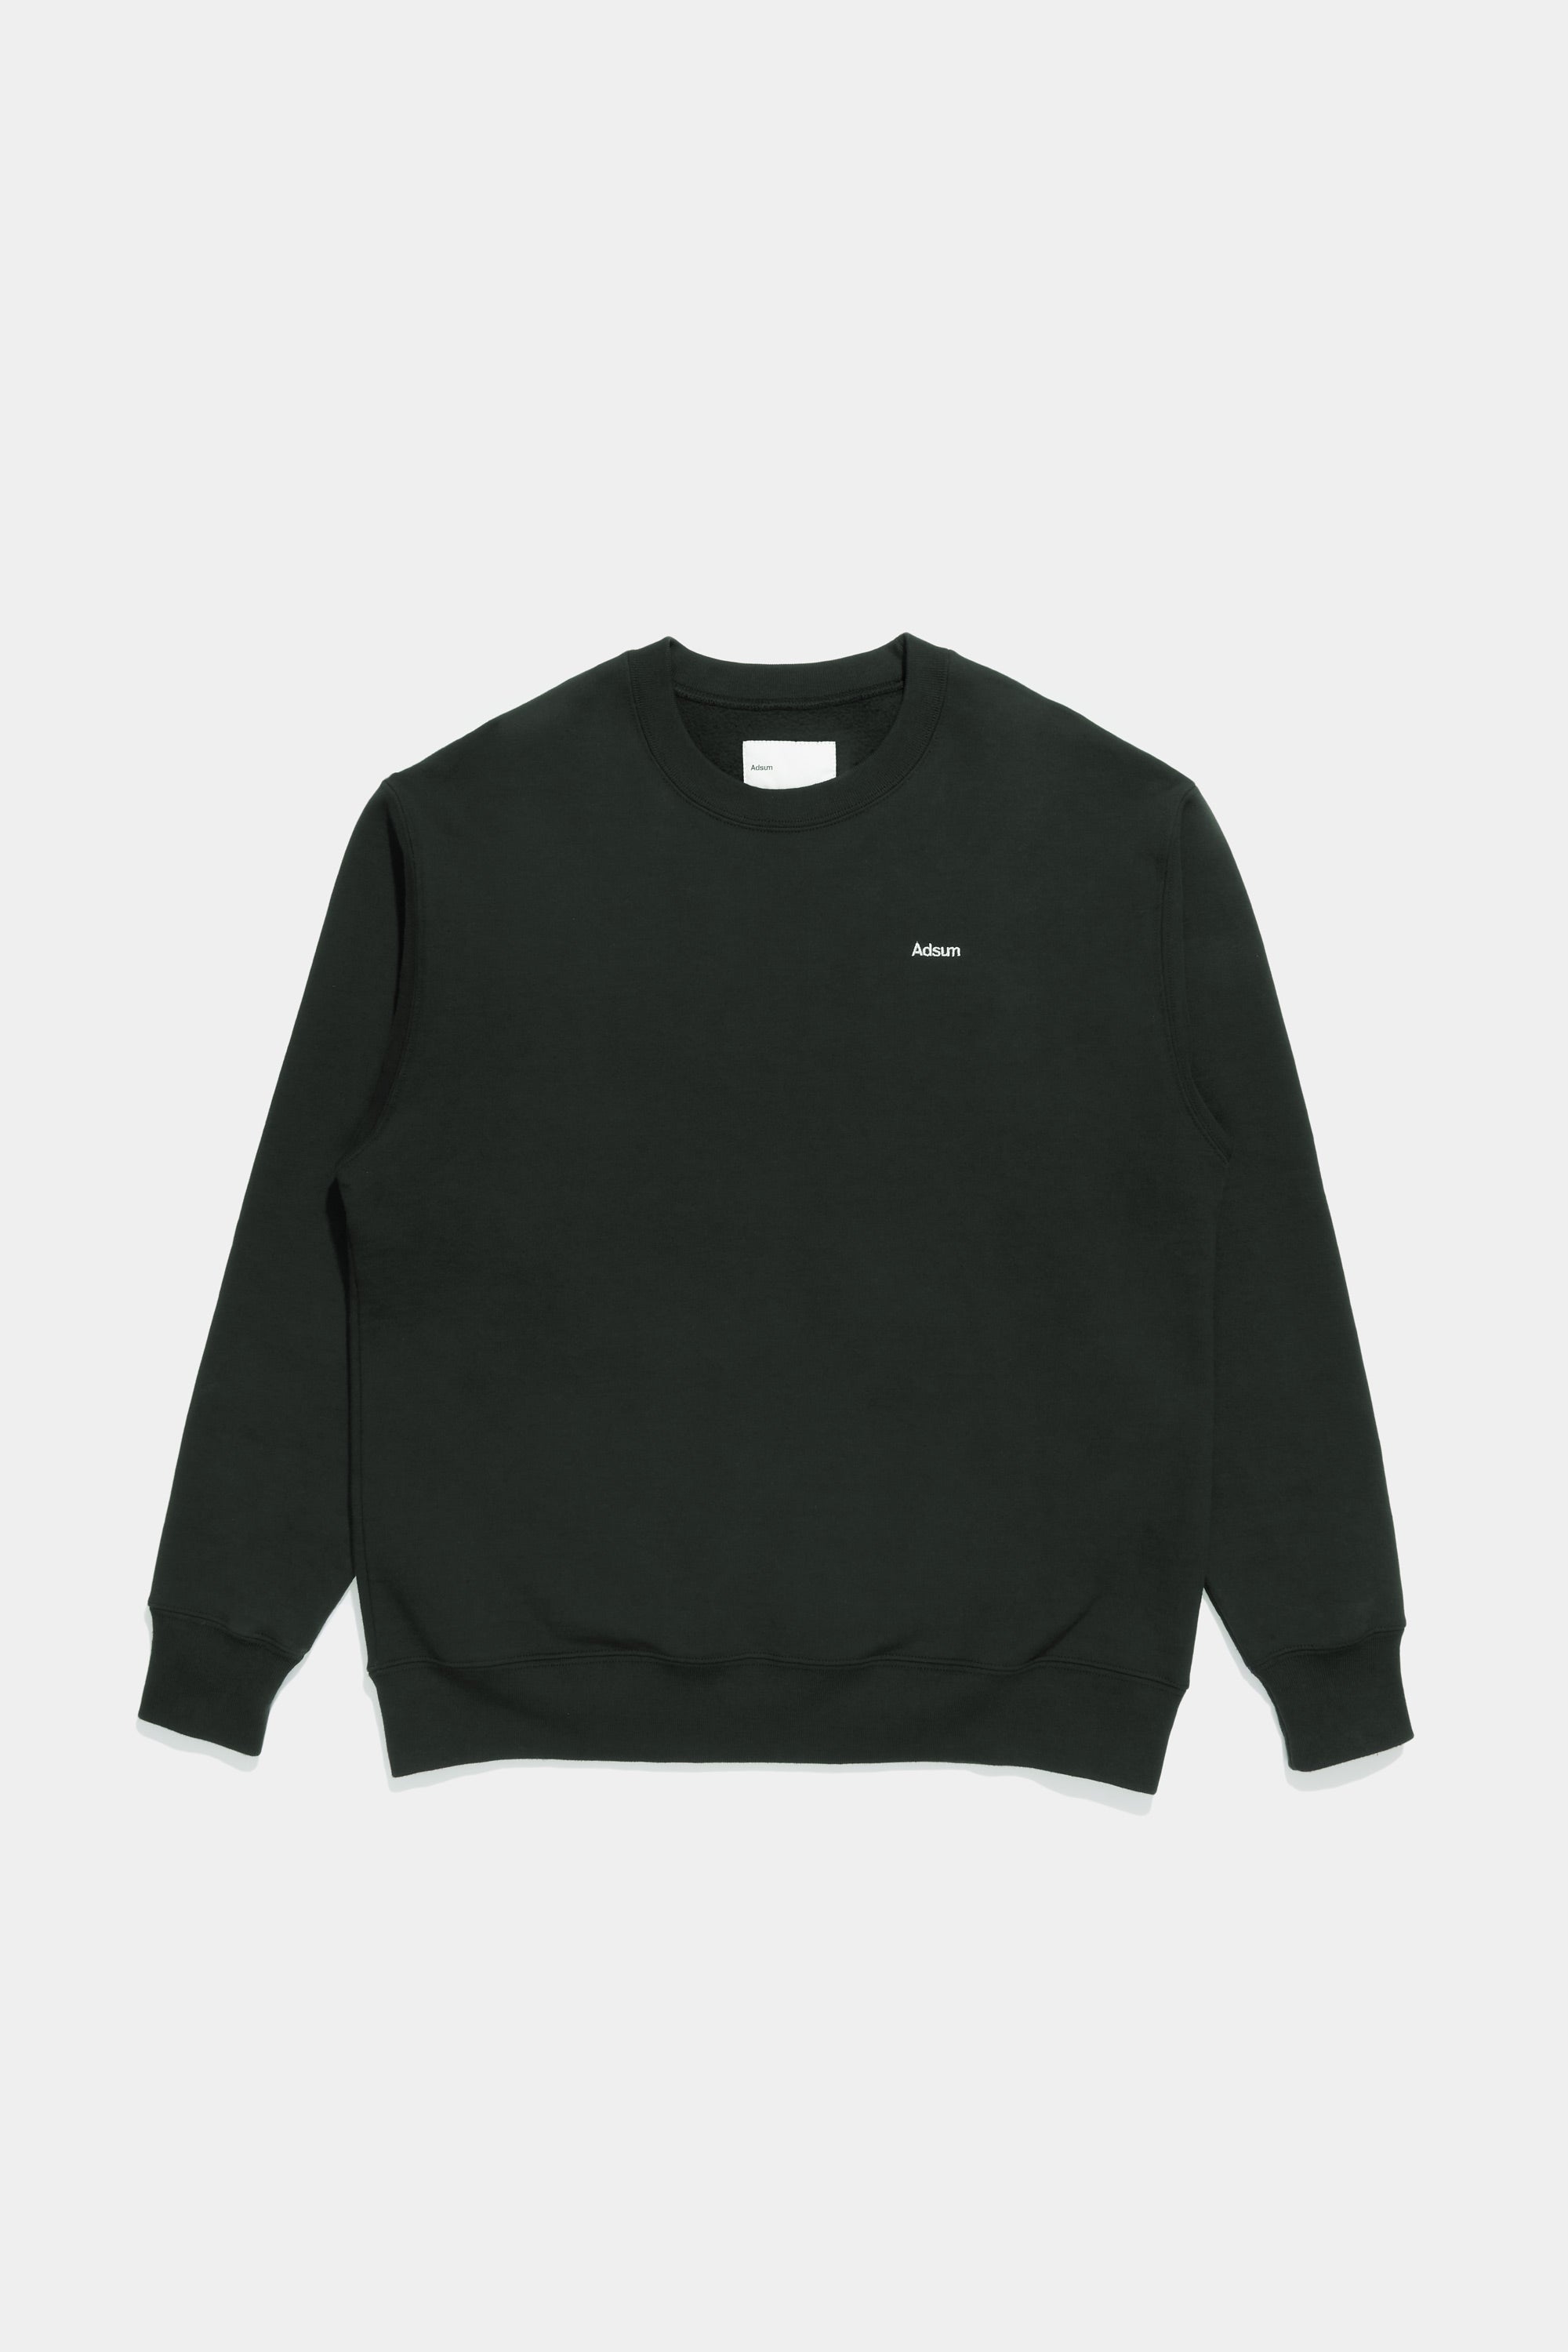 Supreme Western Cut Out Hooded Sweatshirt Black (SS23)